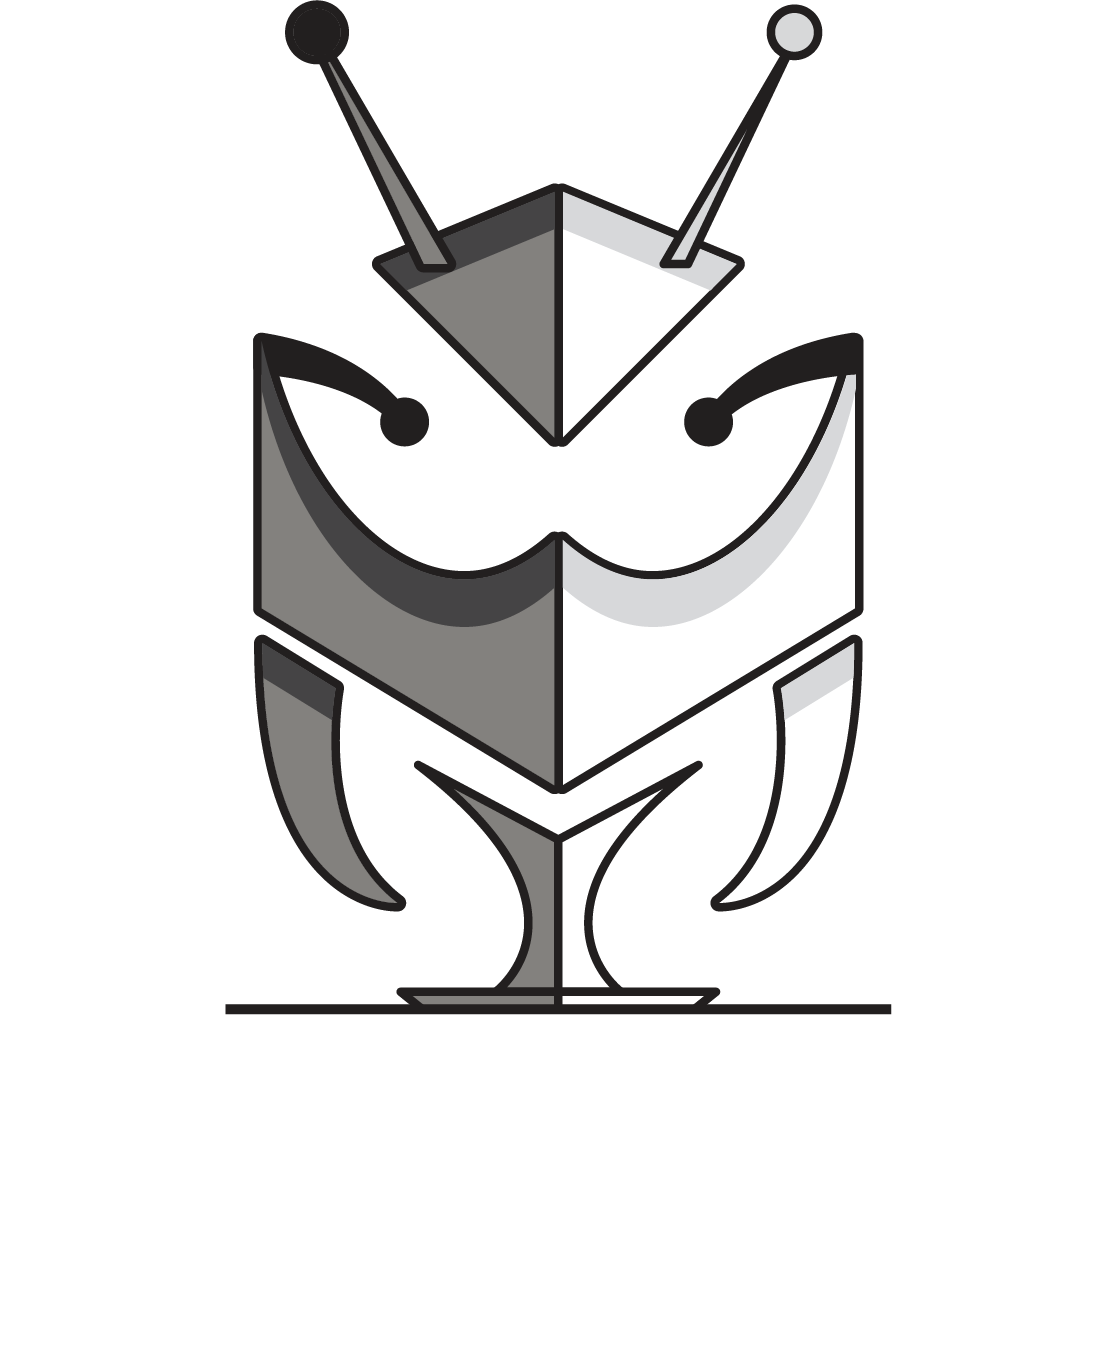 Playmantis Studio Private Limited